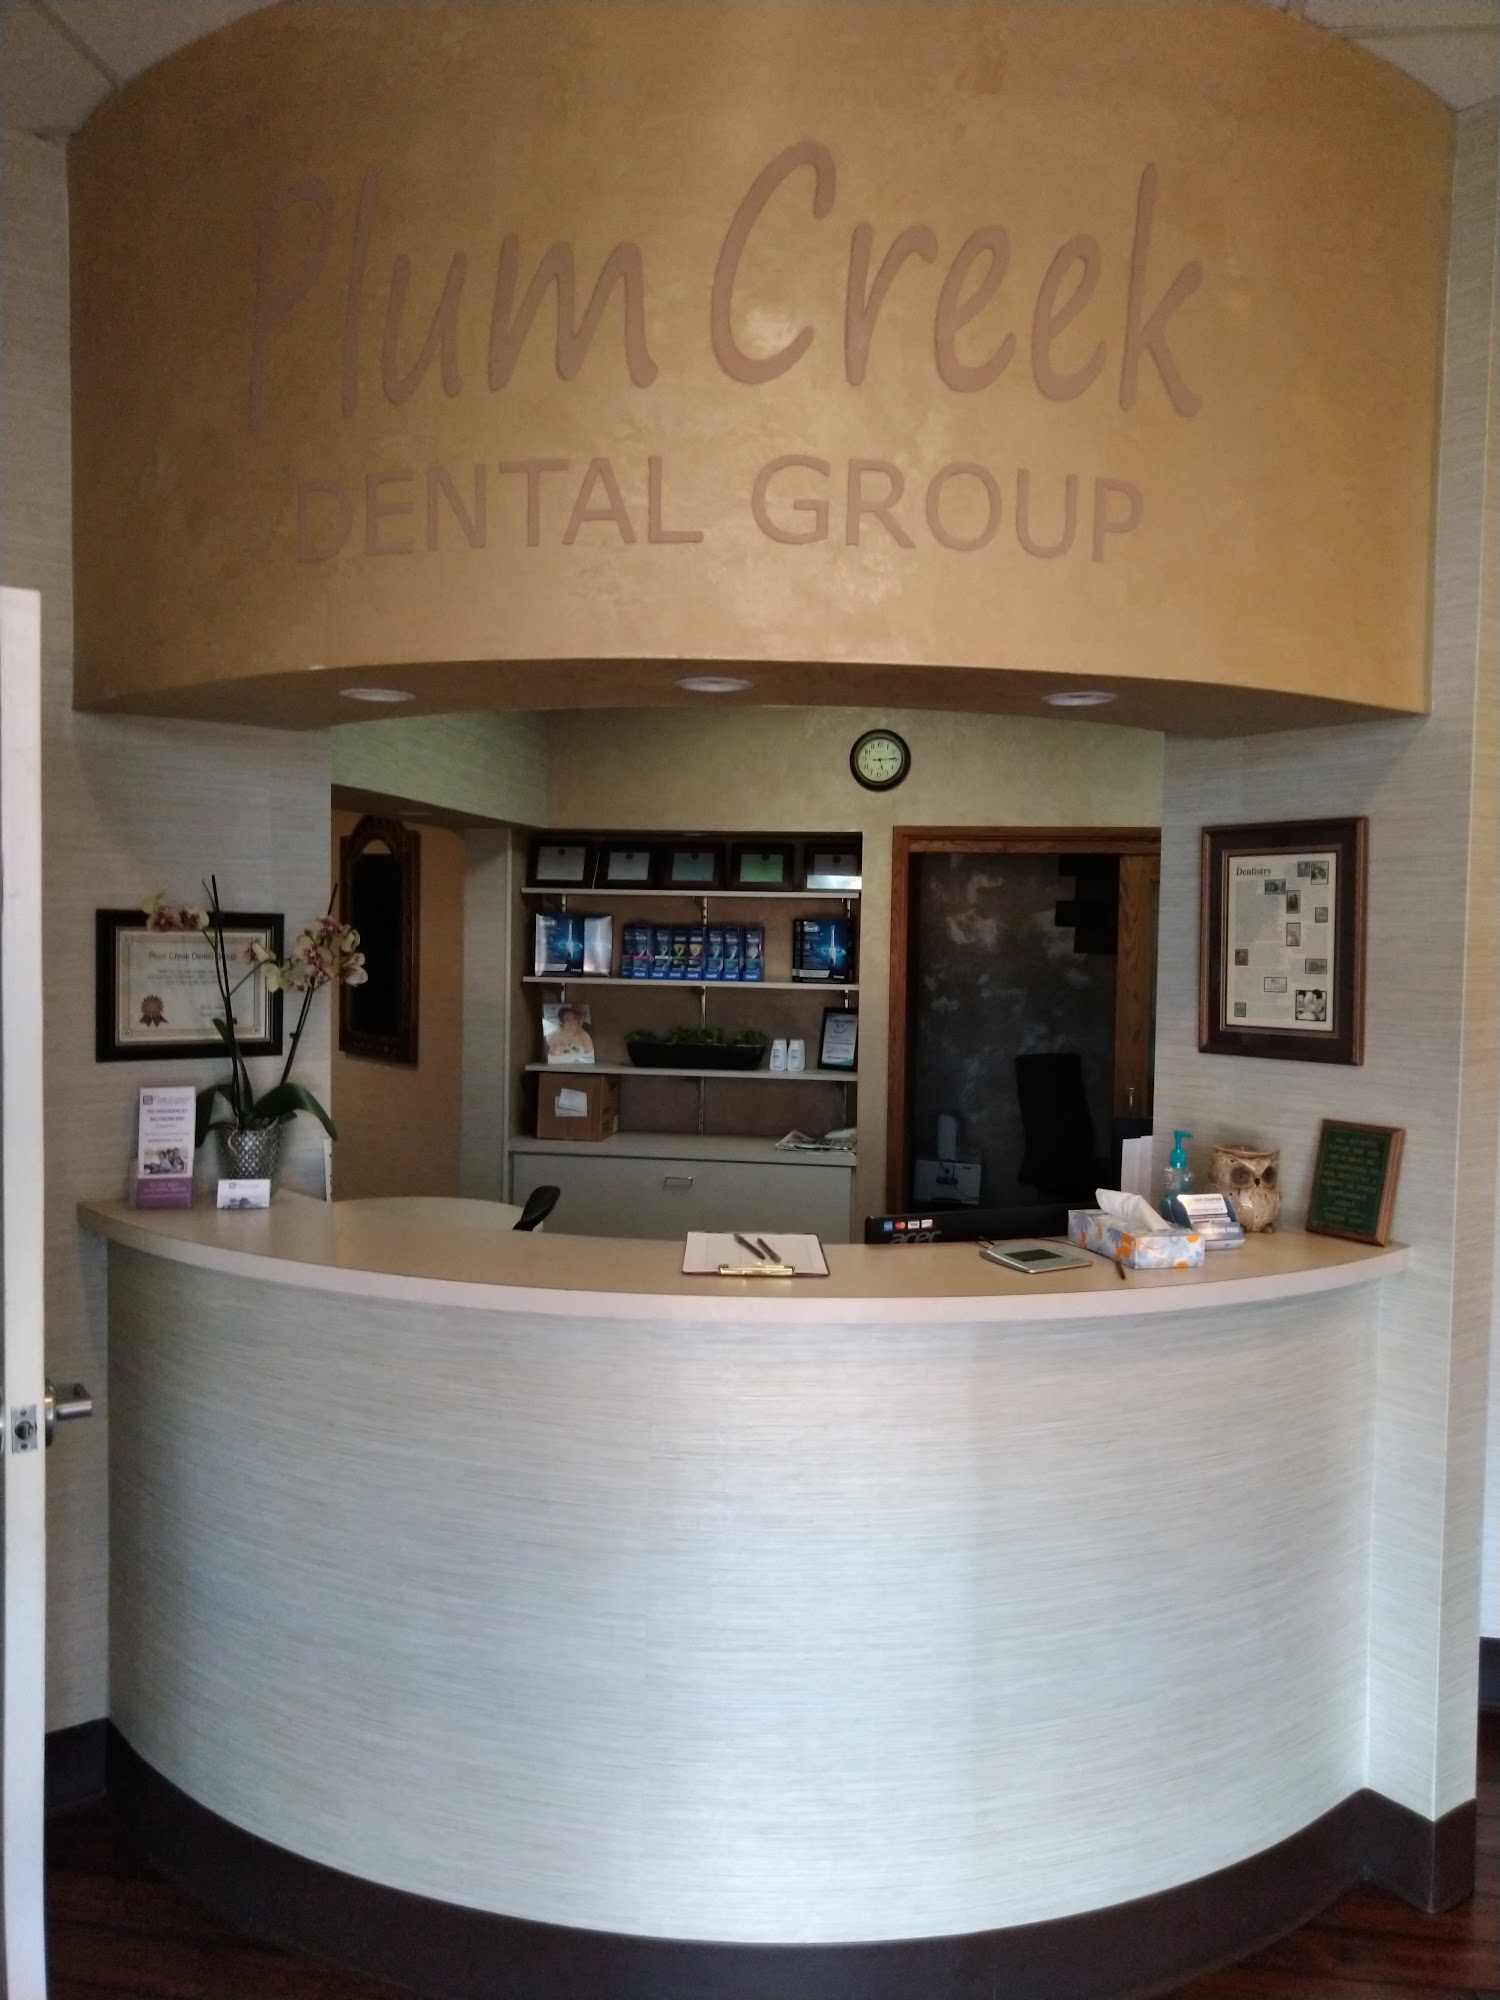 Plum Creek Dental Group 1711 S Colorado St APT D, Lockhart Texas 78644